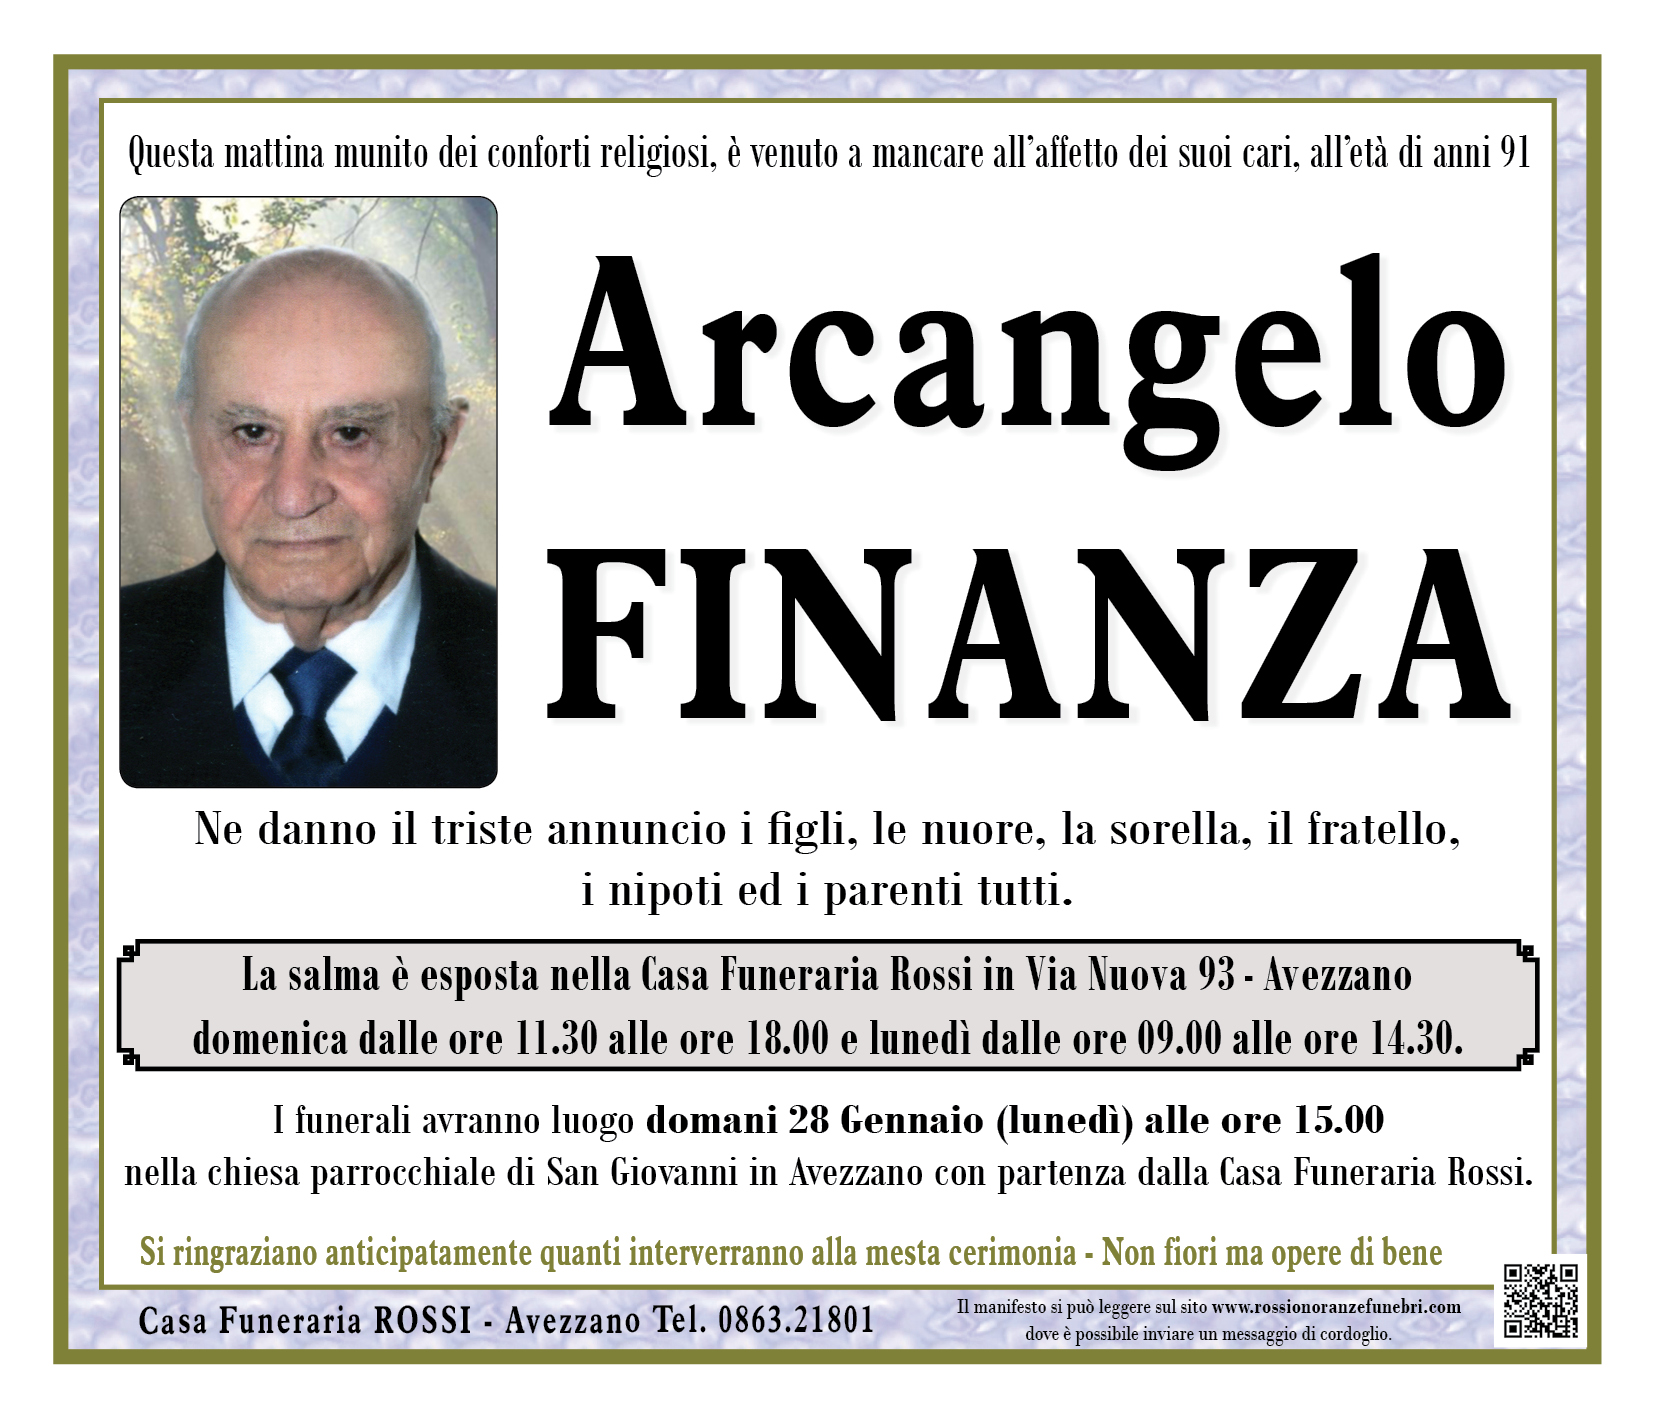 Arcangelo Finanza